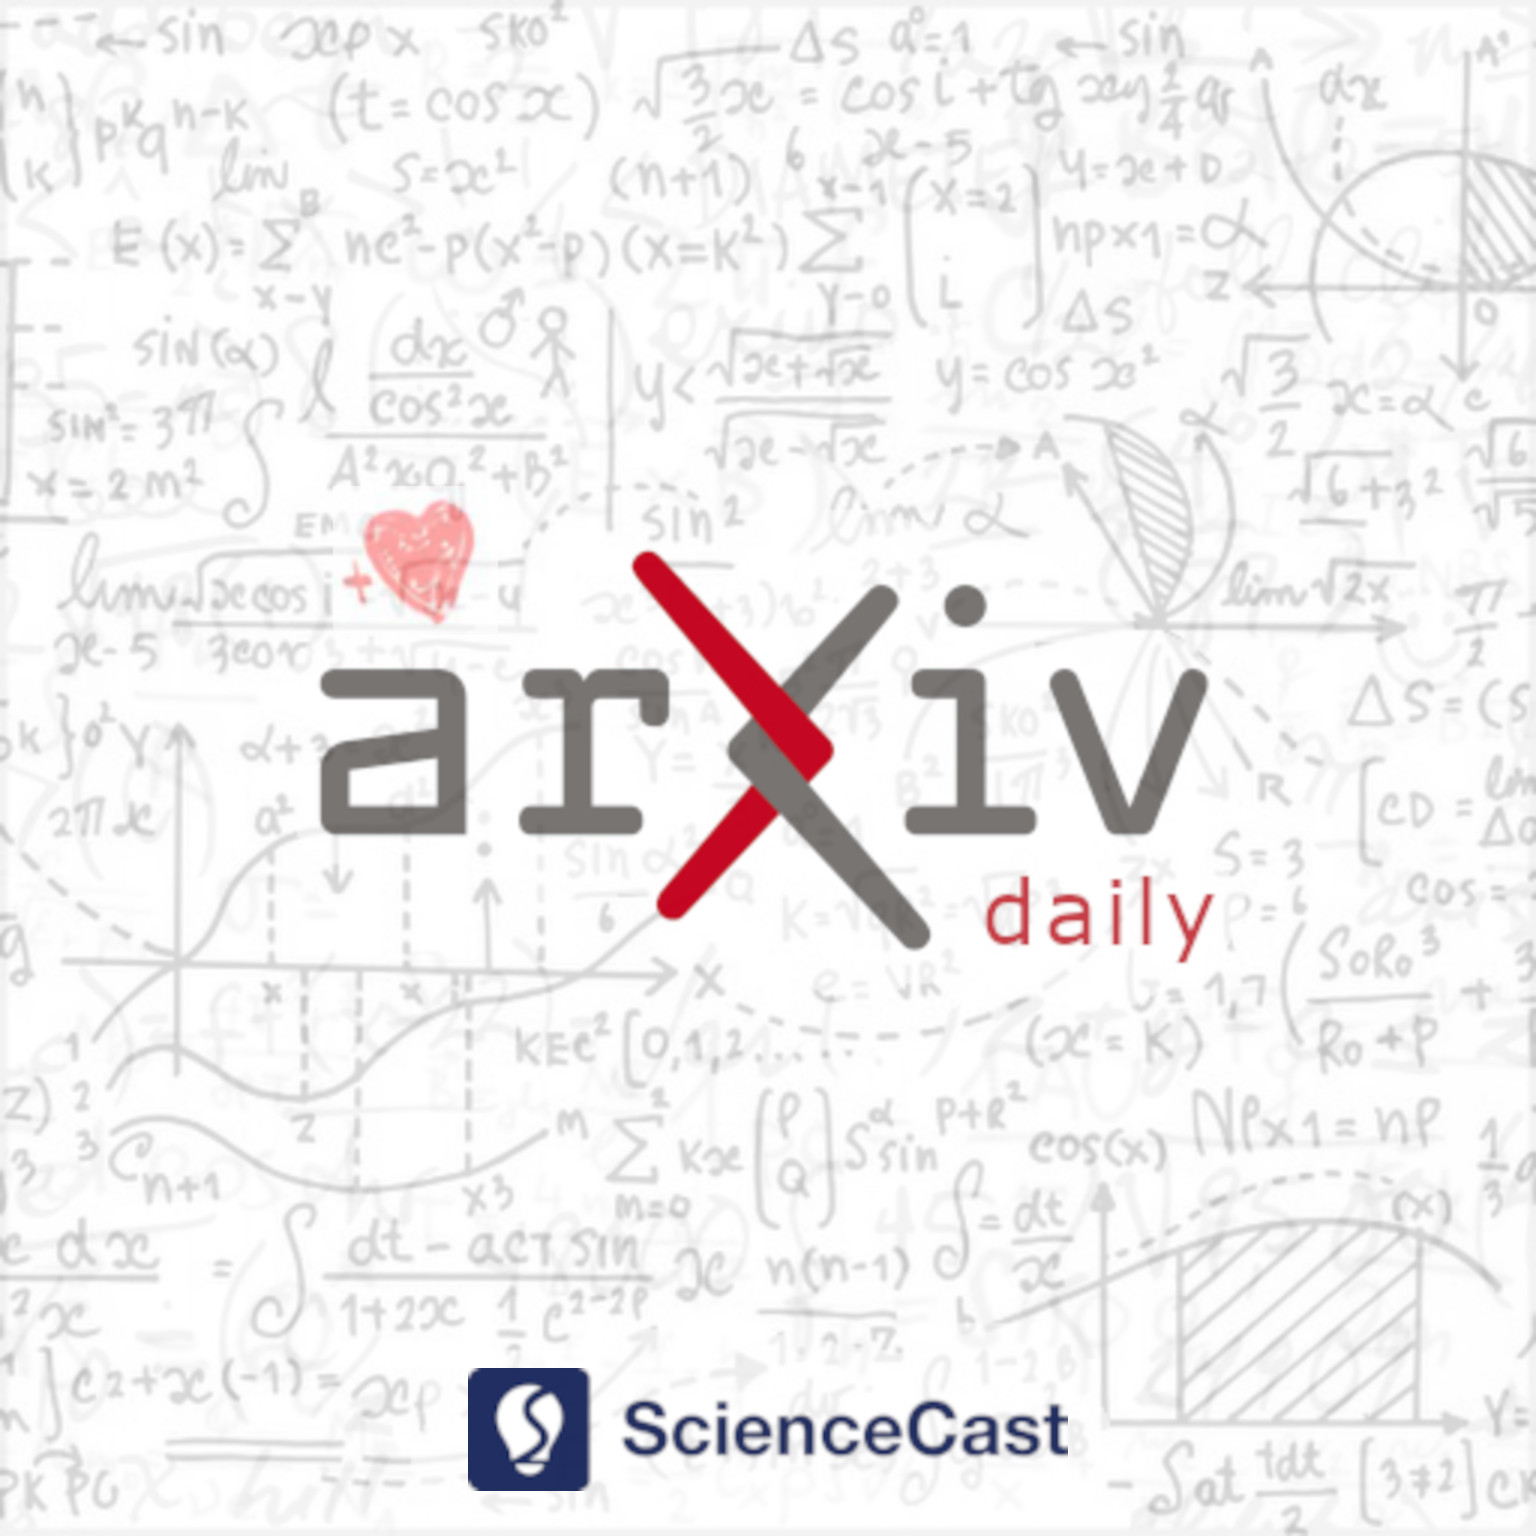 arXiv daily: Plasma Physics